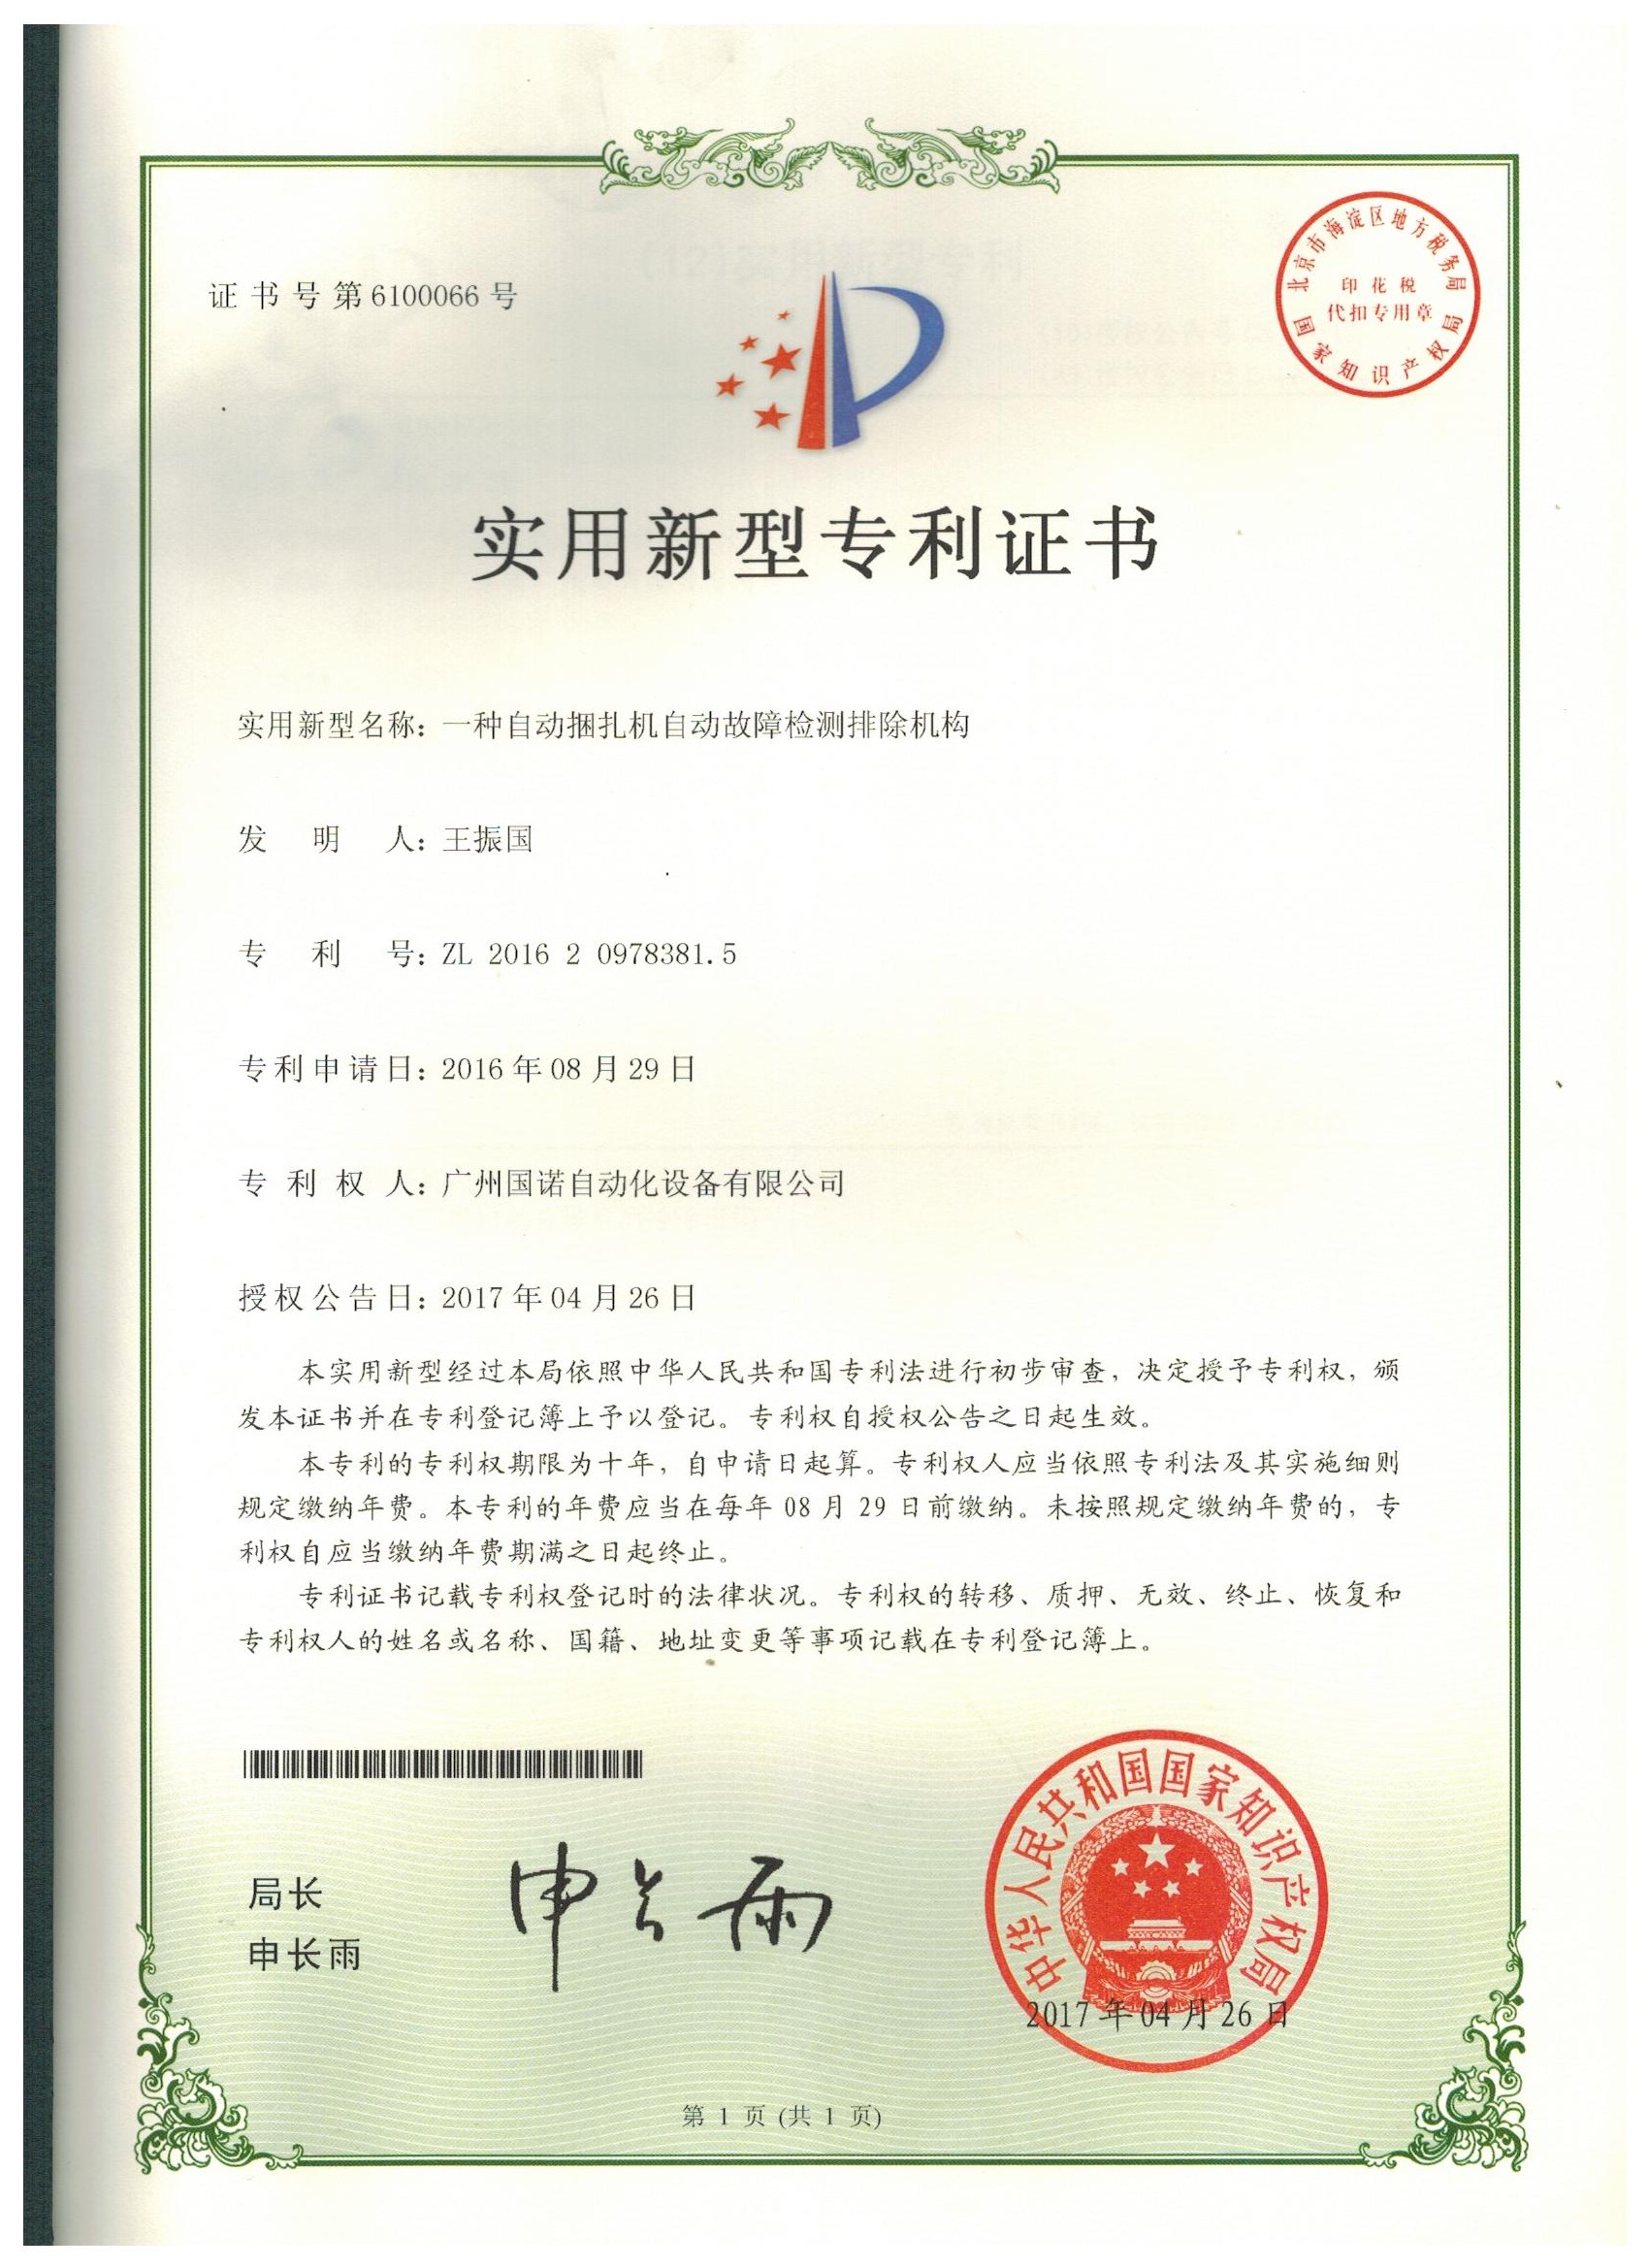 Packing Machine Certificate